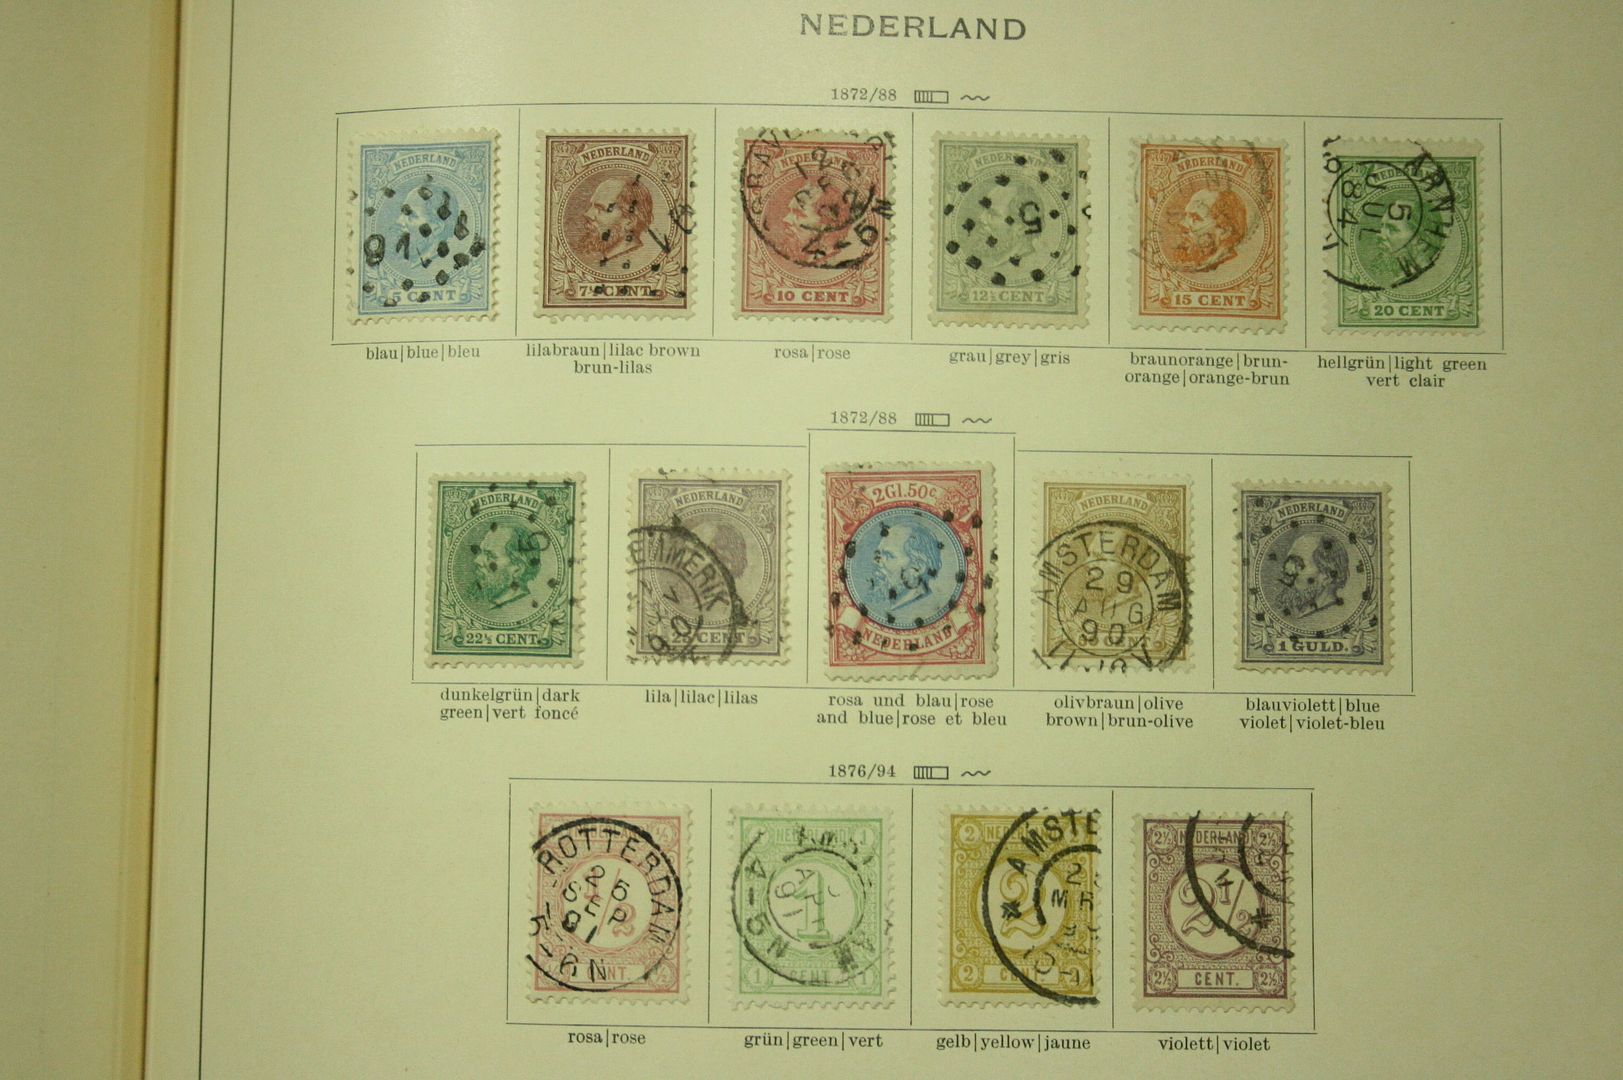 00122 Nederland - 5